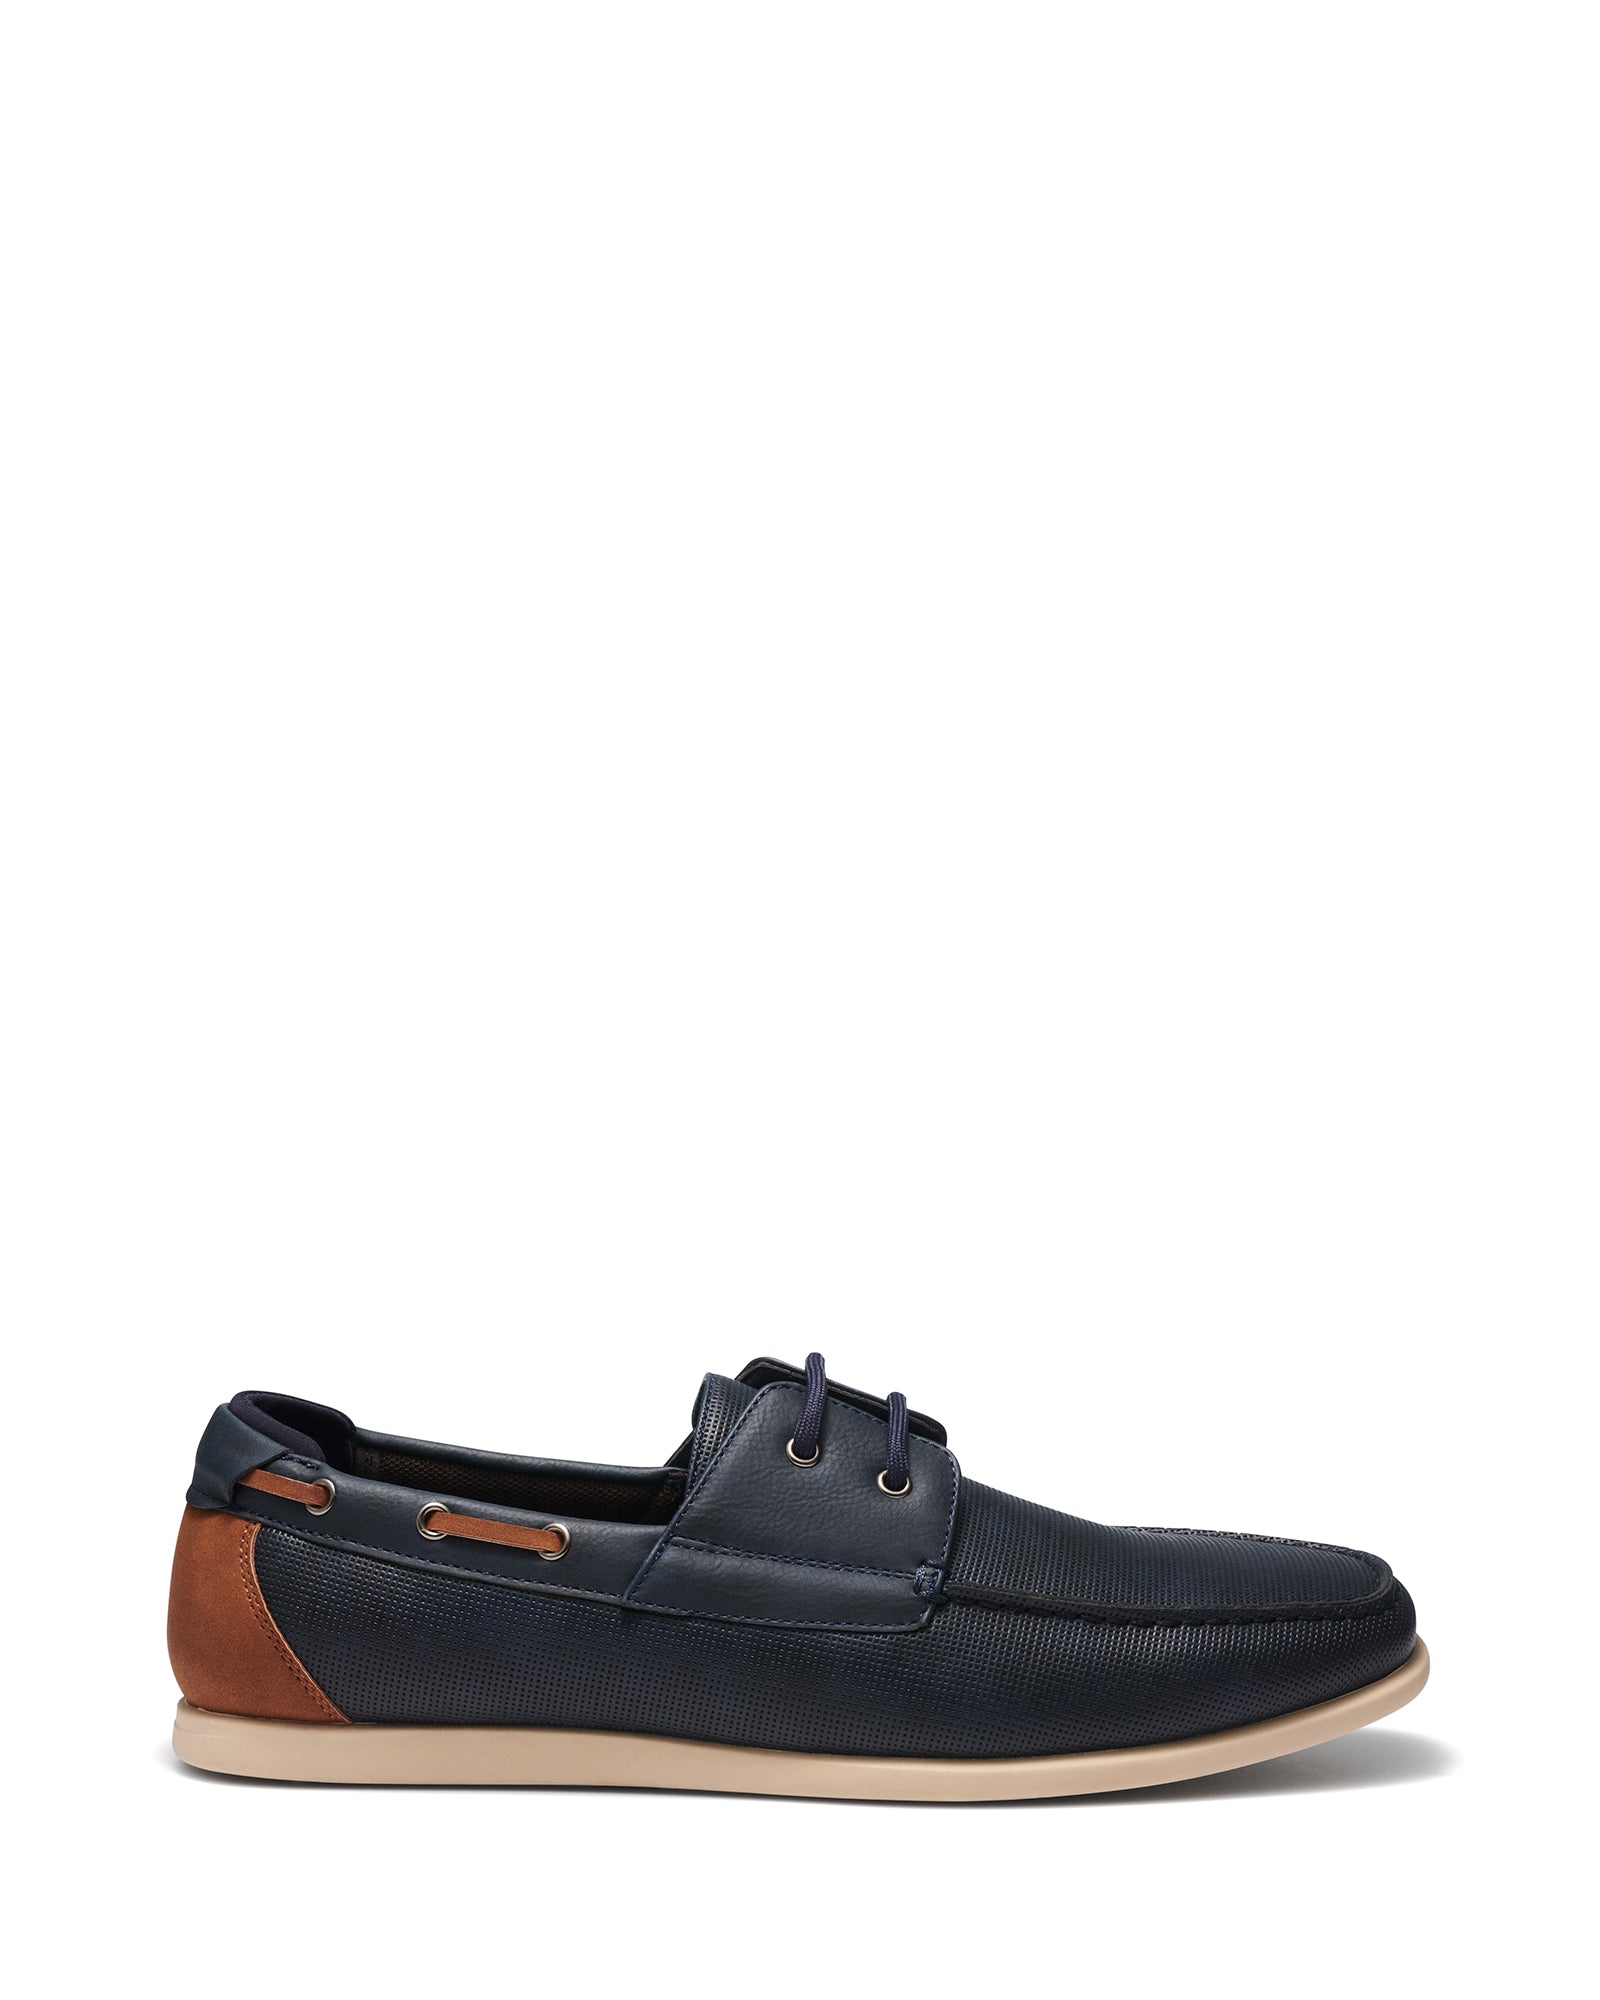 Uncut Shoes Langford Navy | Men's Boat Shoe | Loafer | Deck Shoe ...